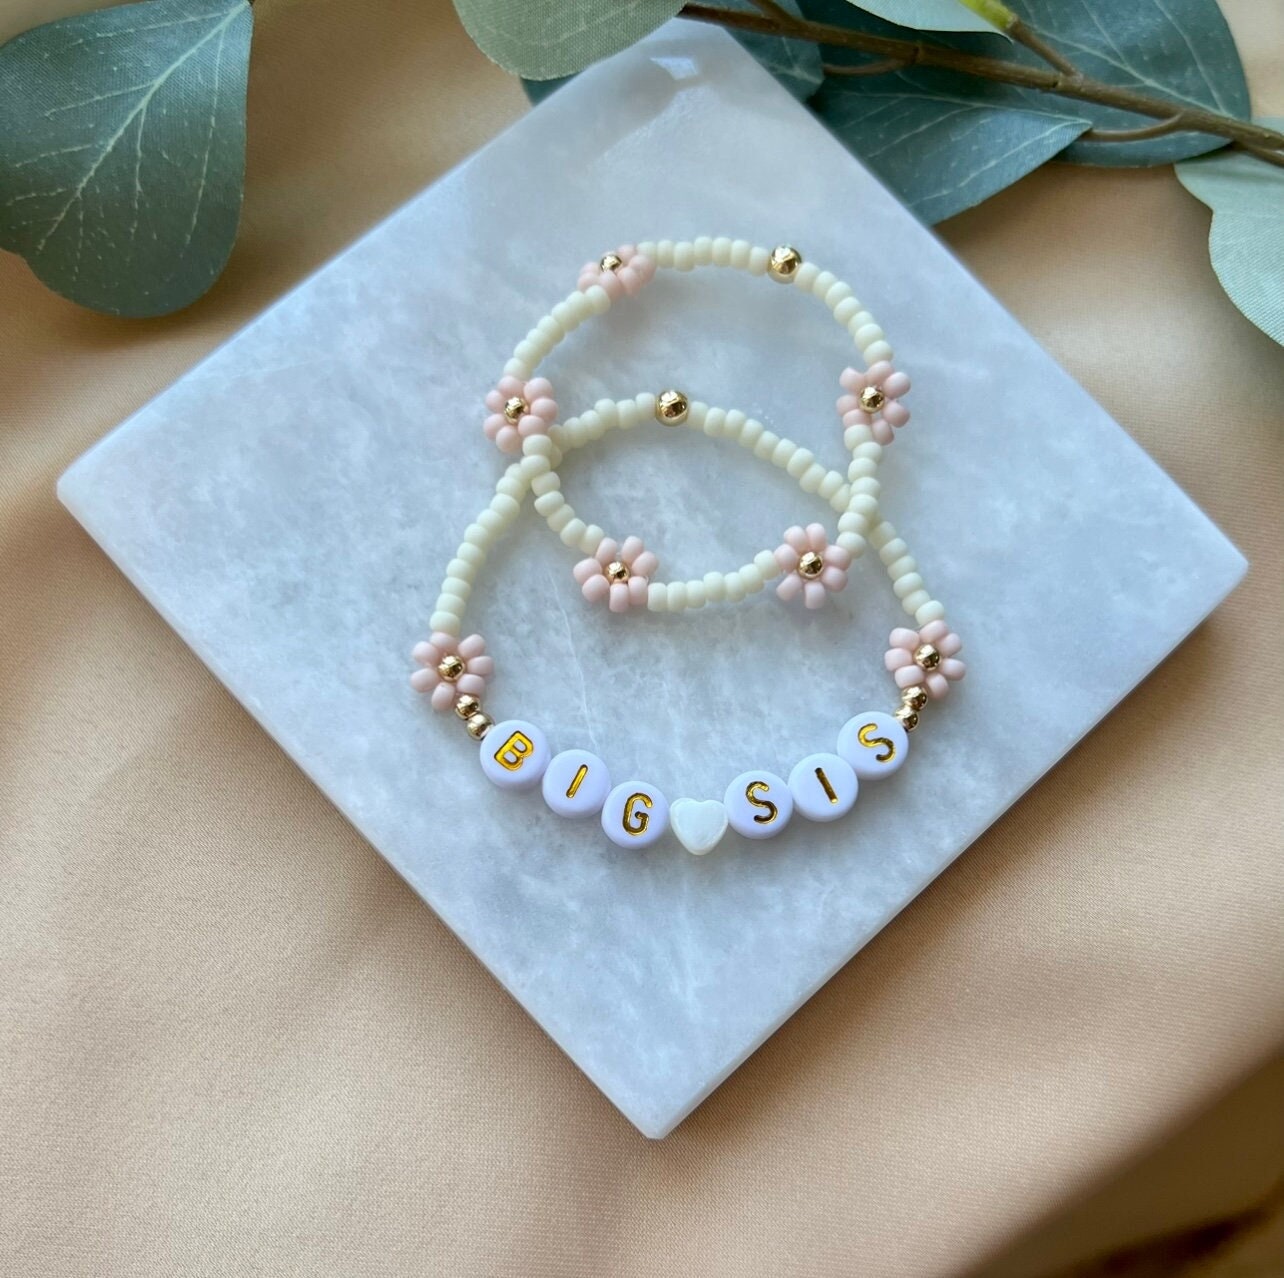 Sister Bracelet / Sister Charm Bracelets / Girls Bracelets / Child Bracelet / Women Bracelet / Birthday Gift Ideas / Handmade Jewelry